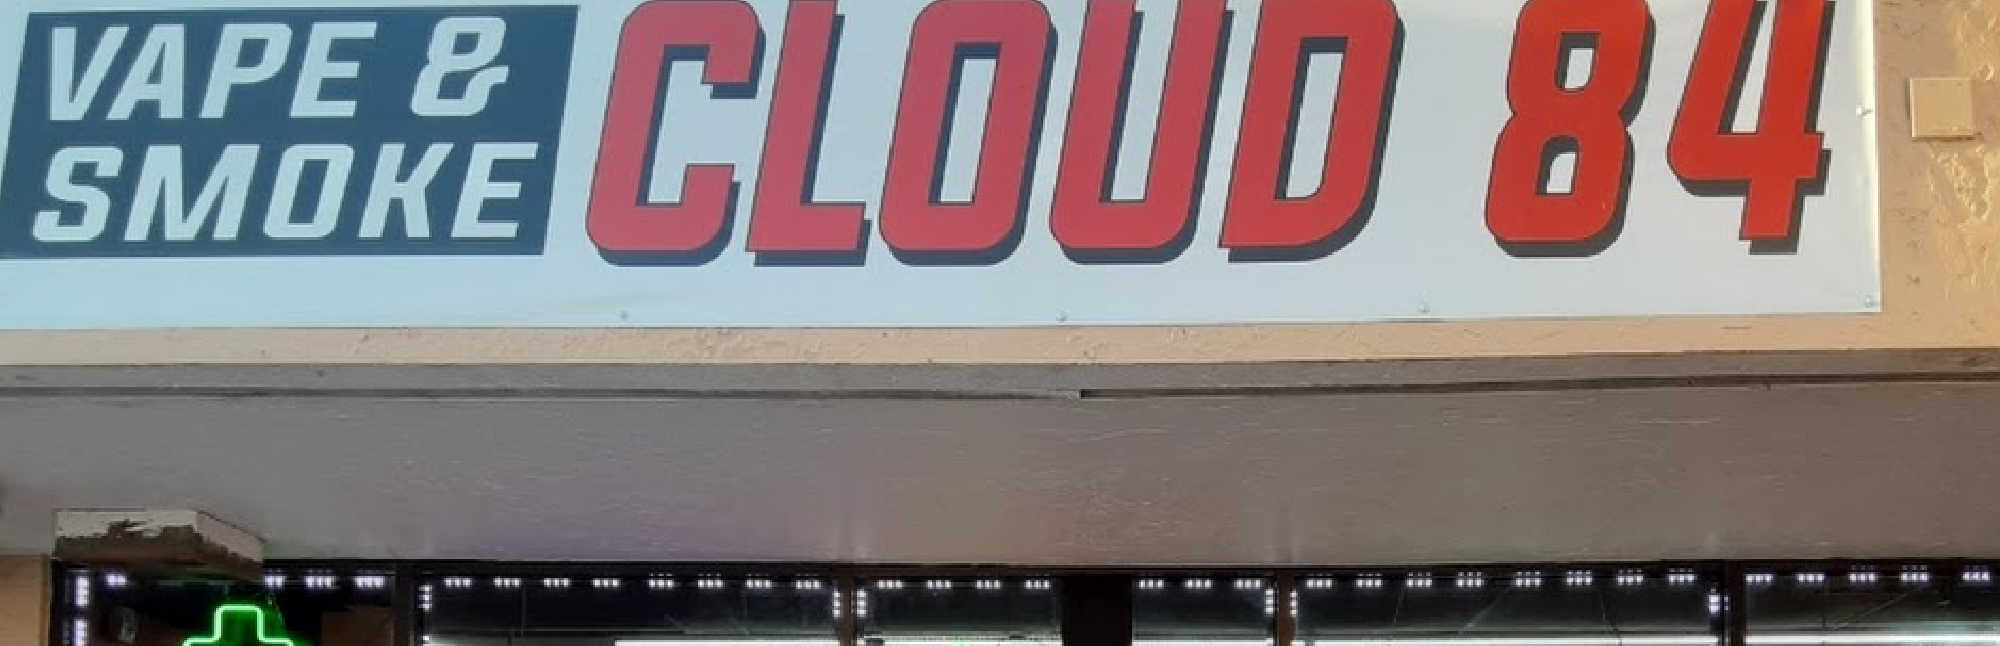 image of cloud 84 in weston florida